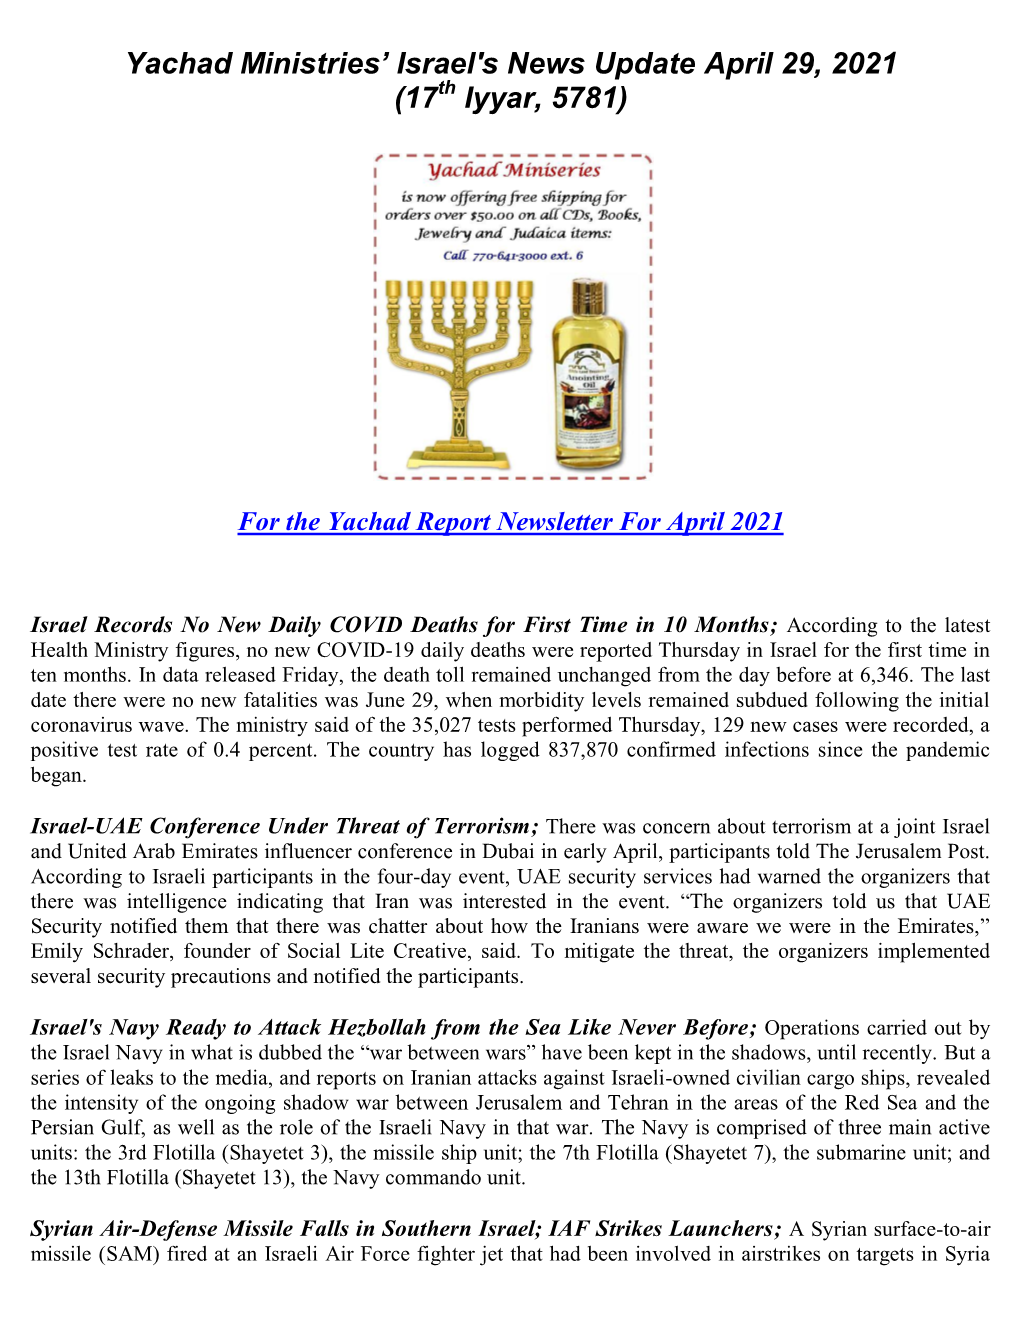 Yachad Ministries' Israel's News Update April 29, 2021 (17 Iyyar